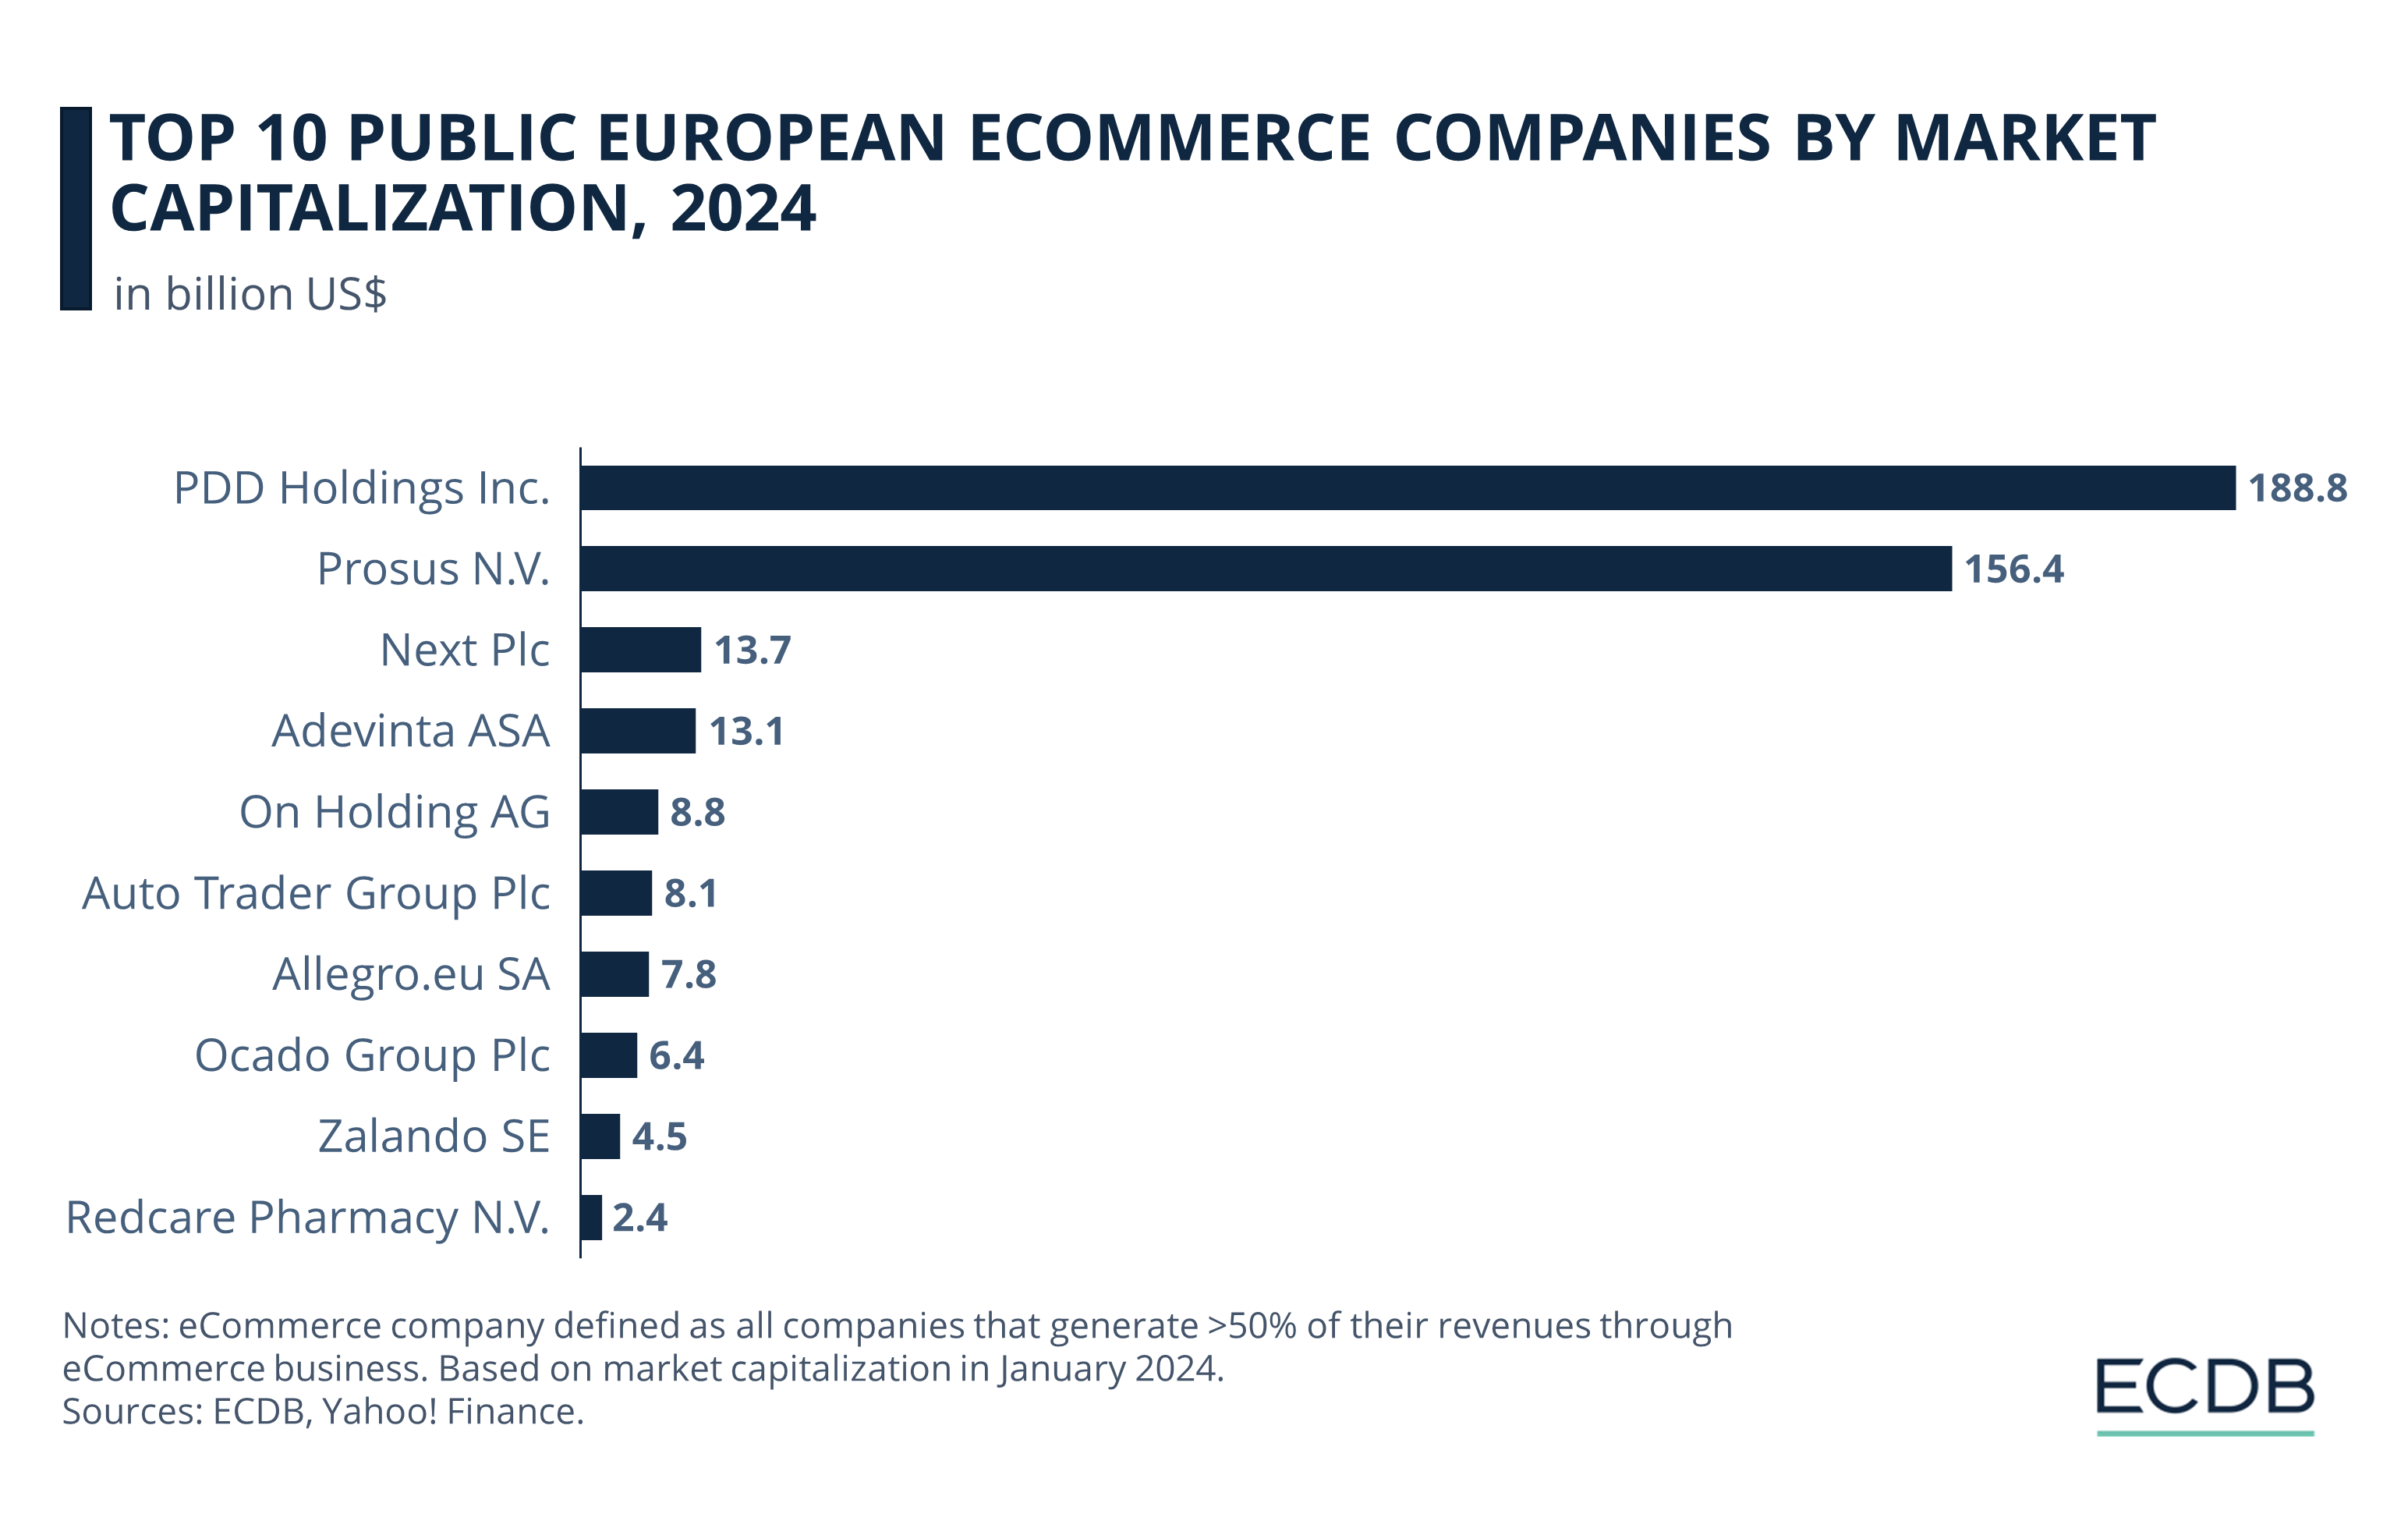 Top 10 Public European eCommerce Companies by Market Capitalization, 2024